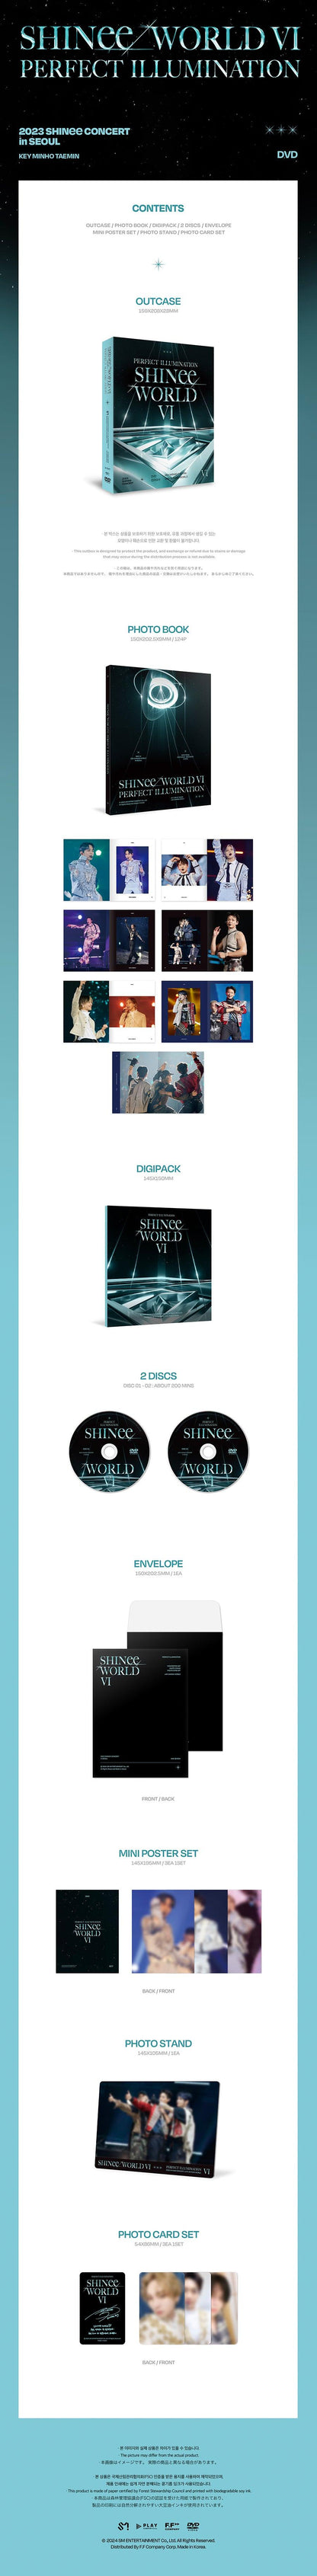 [PRE ORDER] SHINee - World Tour VI [PERFECT ILLUMINATION] in SEOUL (DVD) - KAEPJJANG SHOP (캡짱 숍)